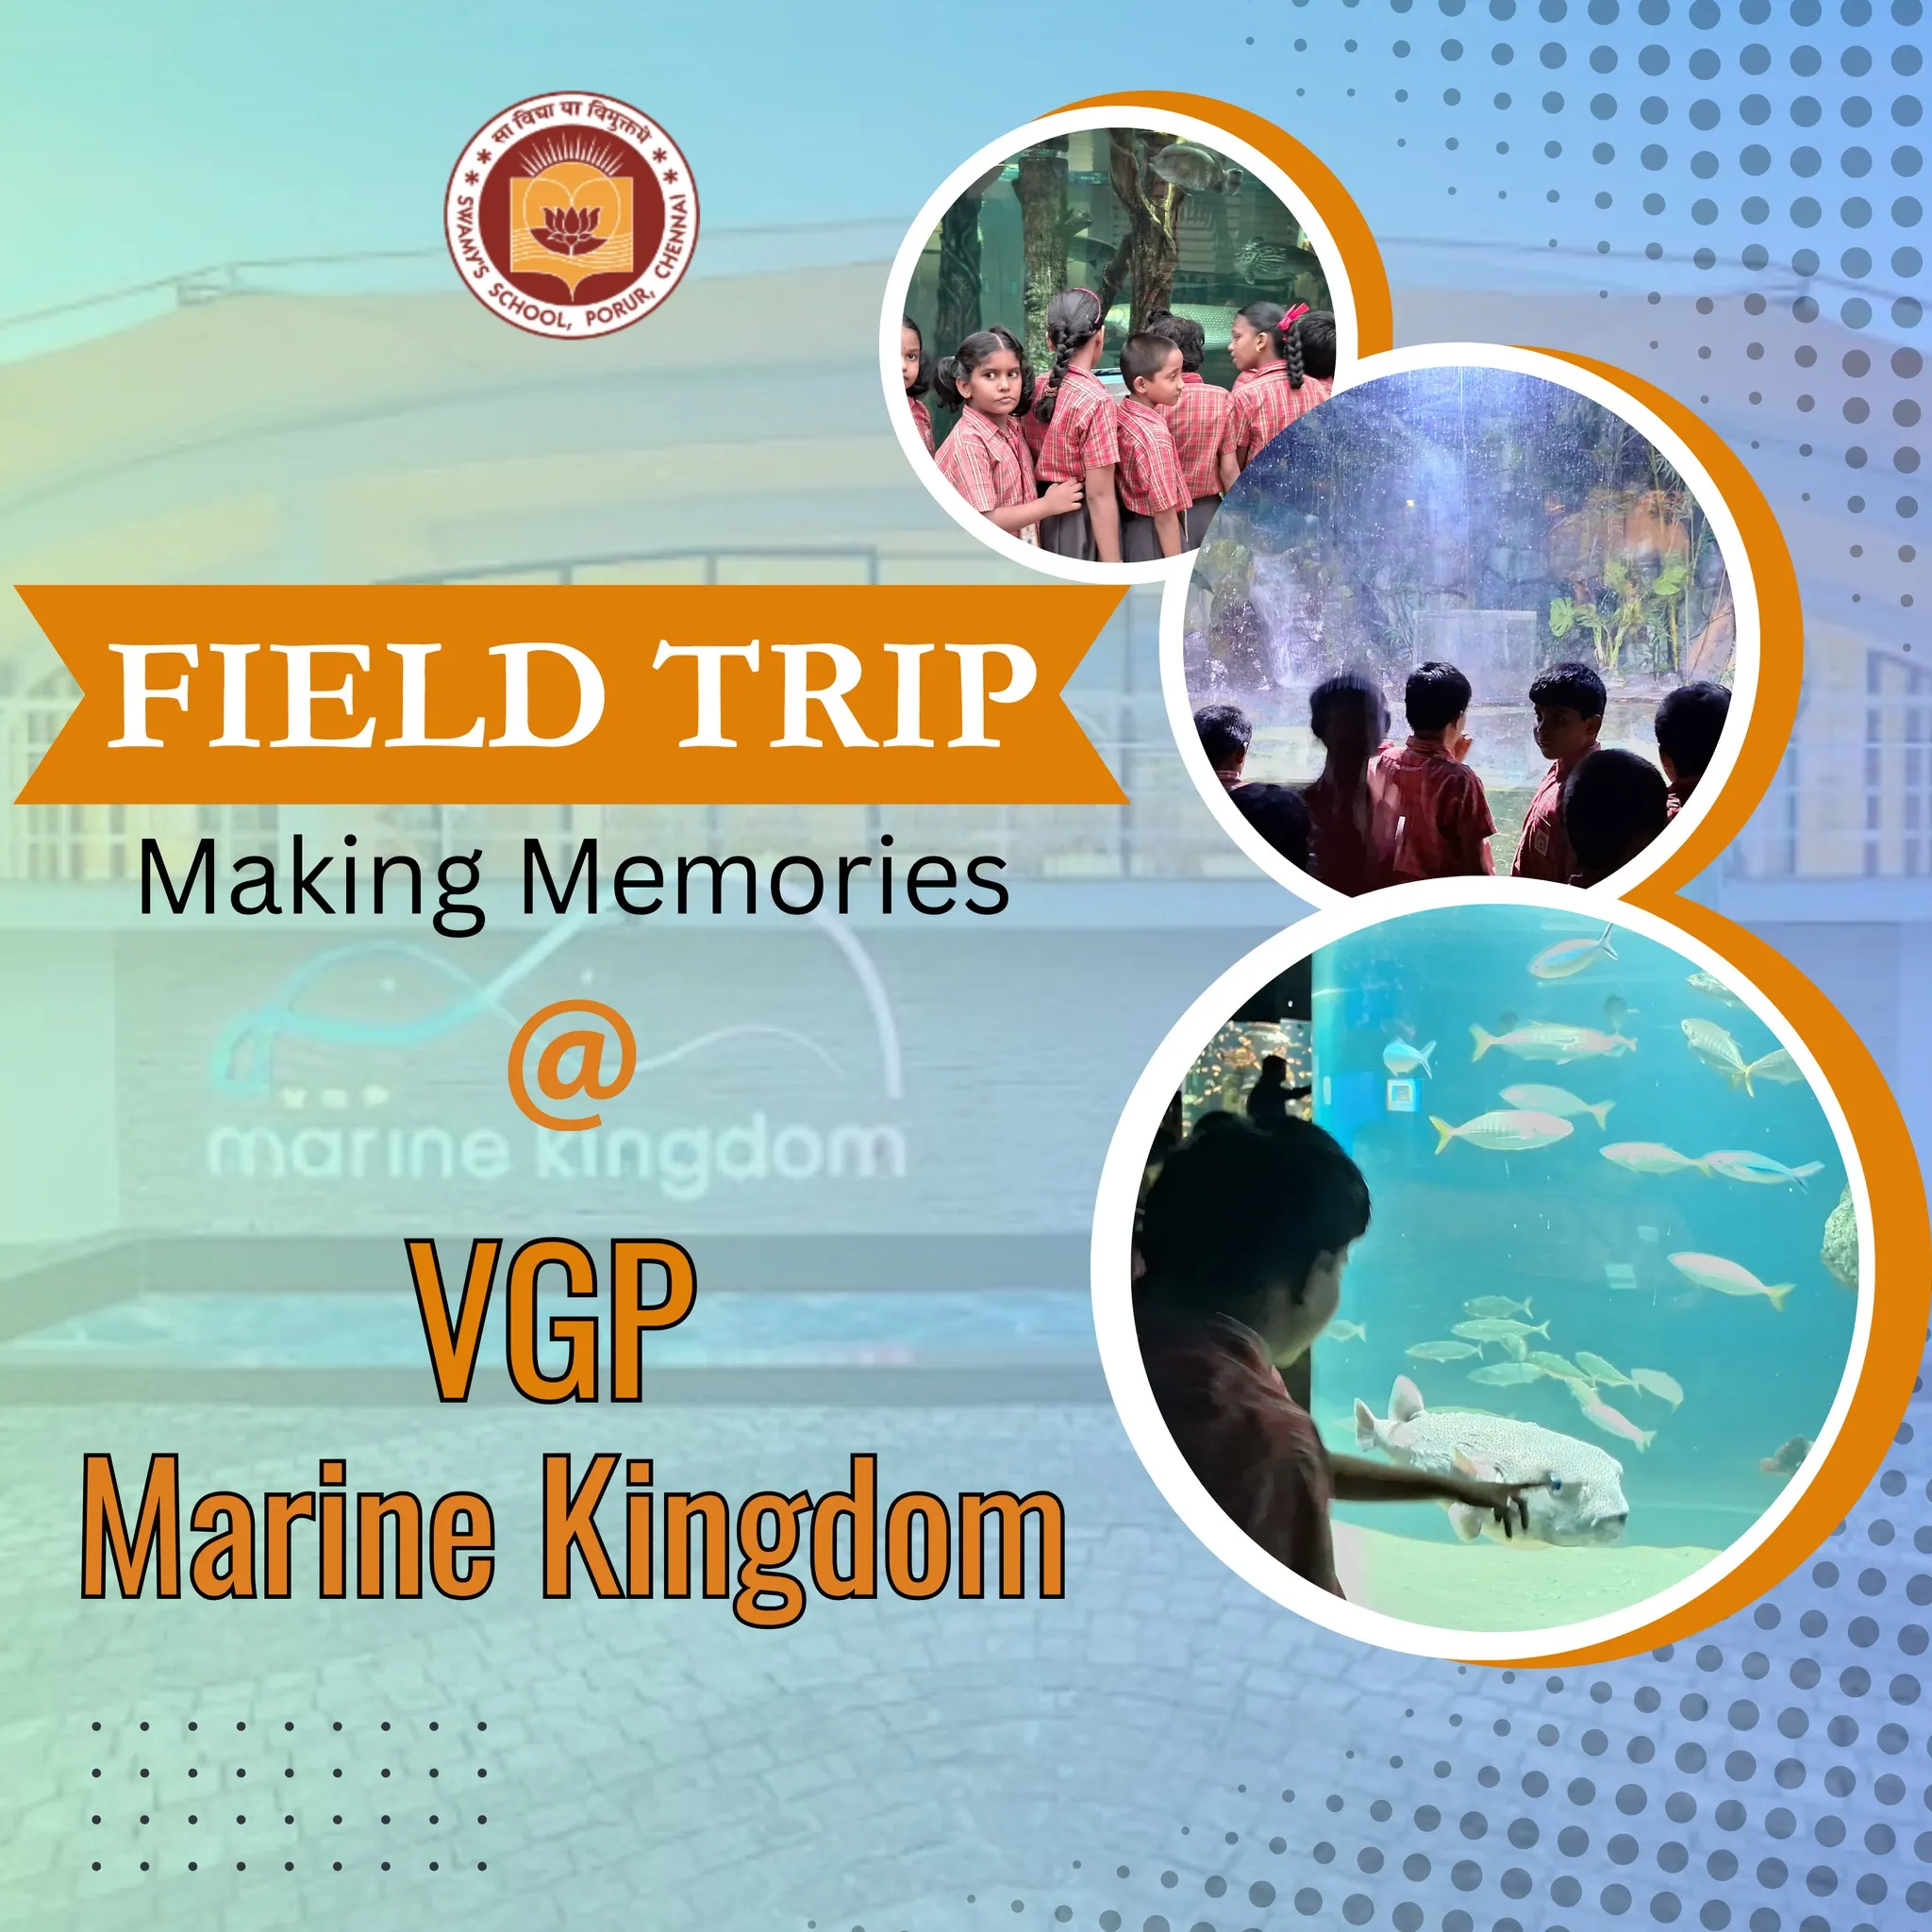 Field trip to VGP Marine Kingdom